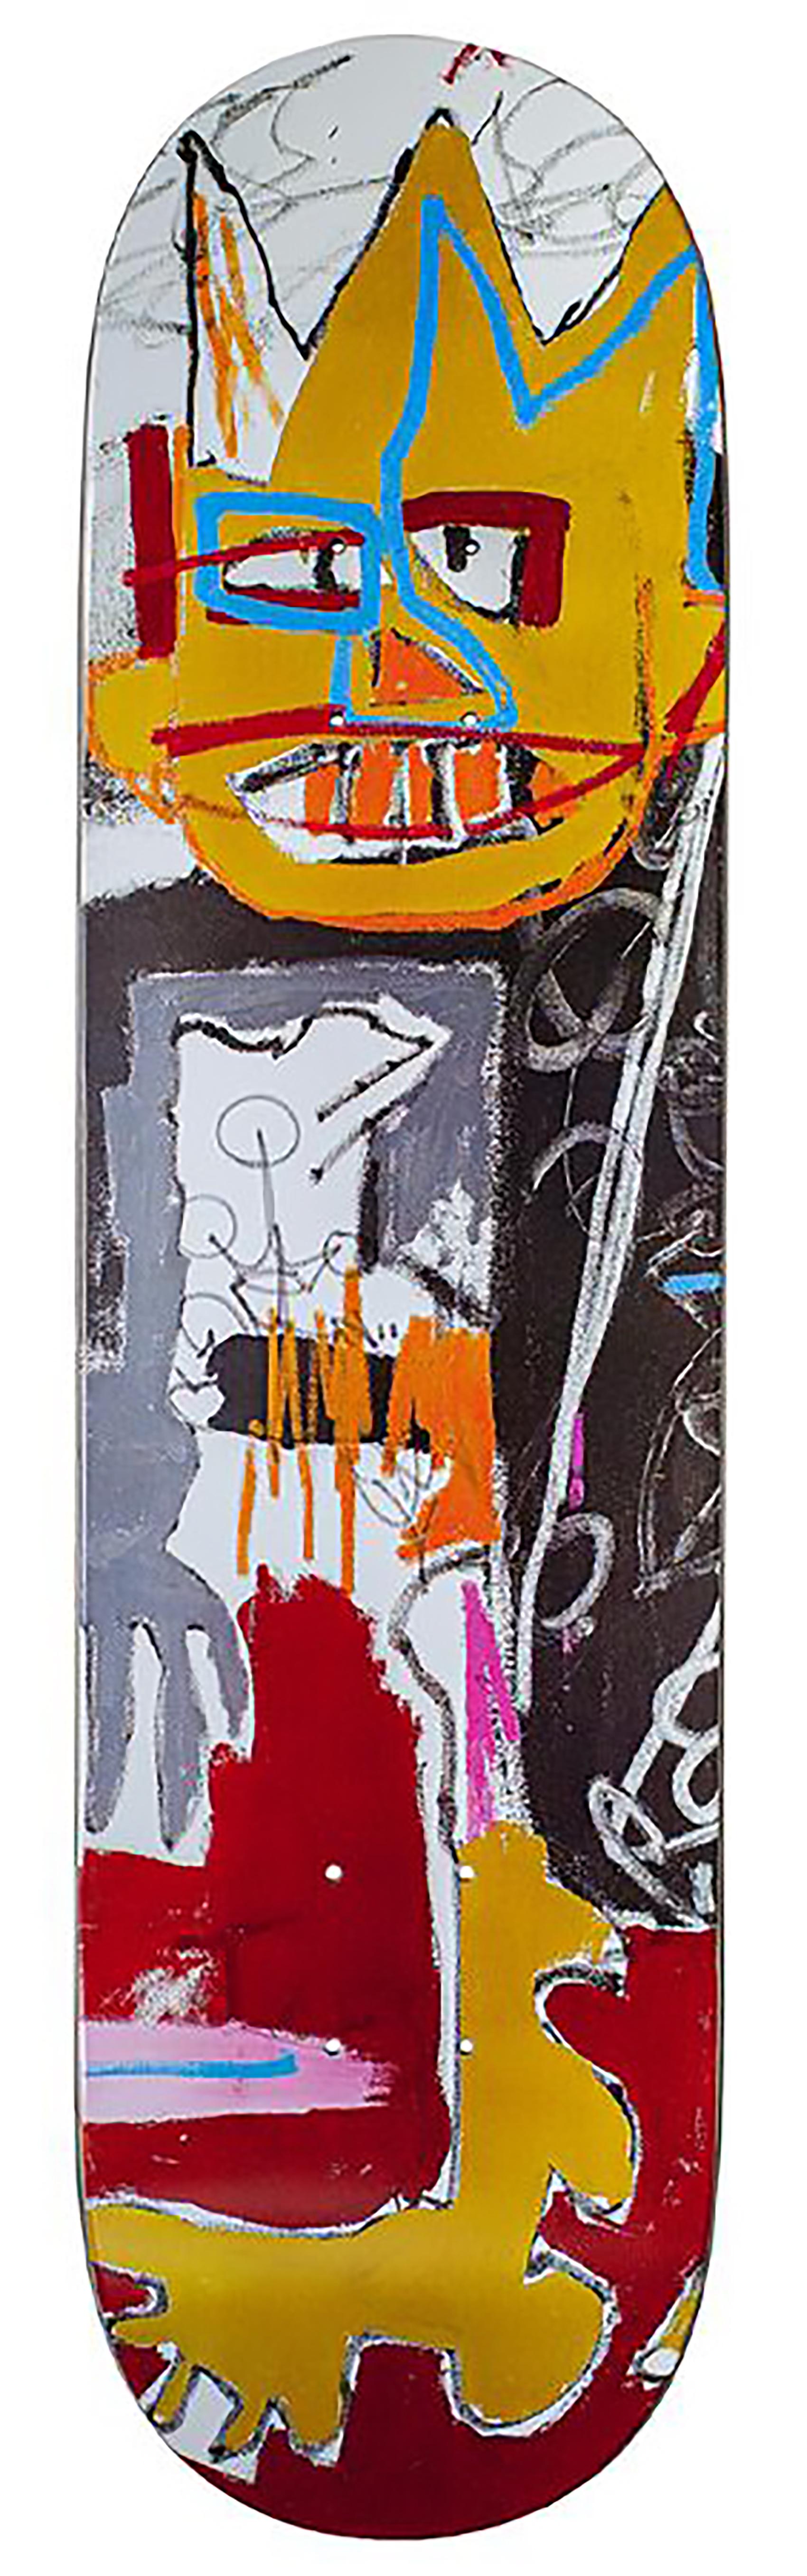 Basquiat Skateboard Decks: set of 3 works (Basquiat A-One, Toxic, Gold Griot)  - Pop Art Mixed Media Art by (after) Jean-Michel Basquiat